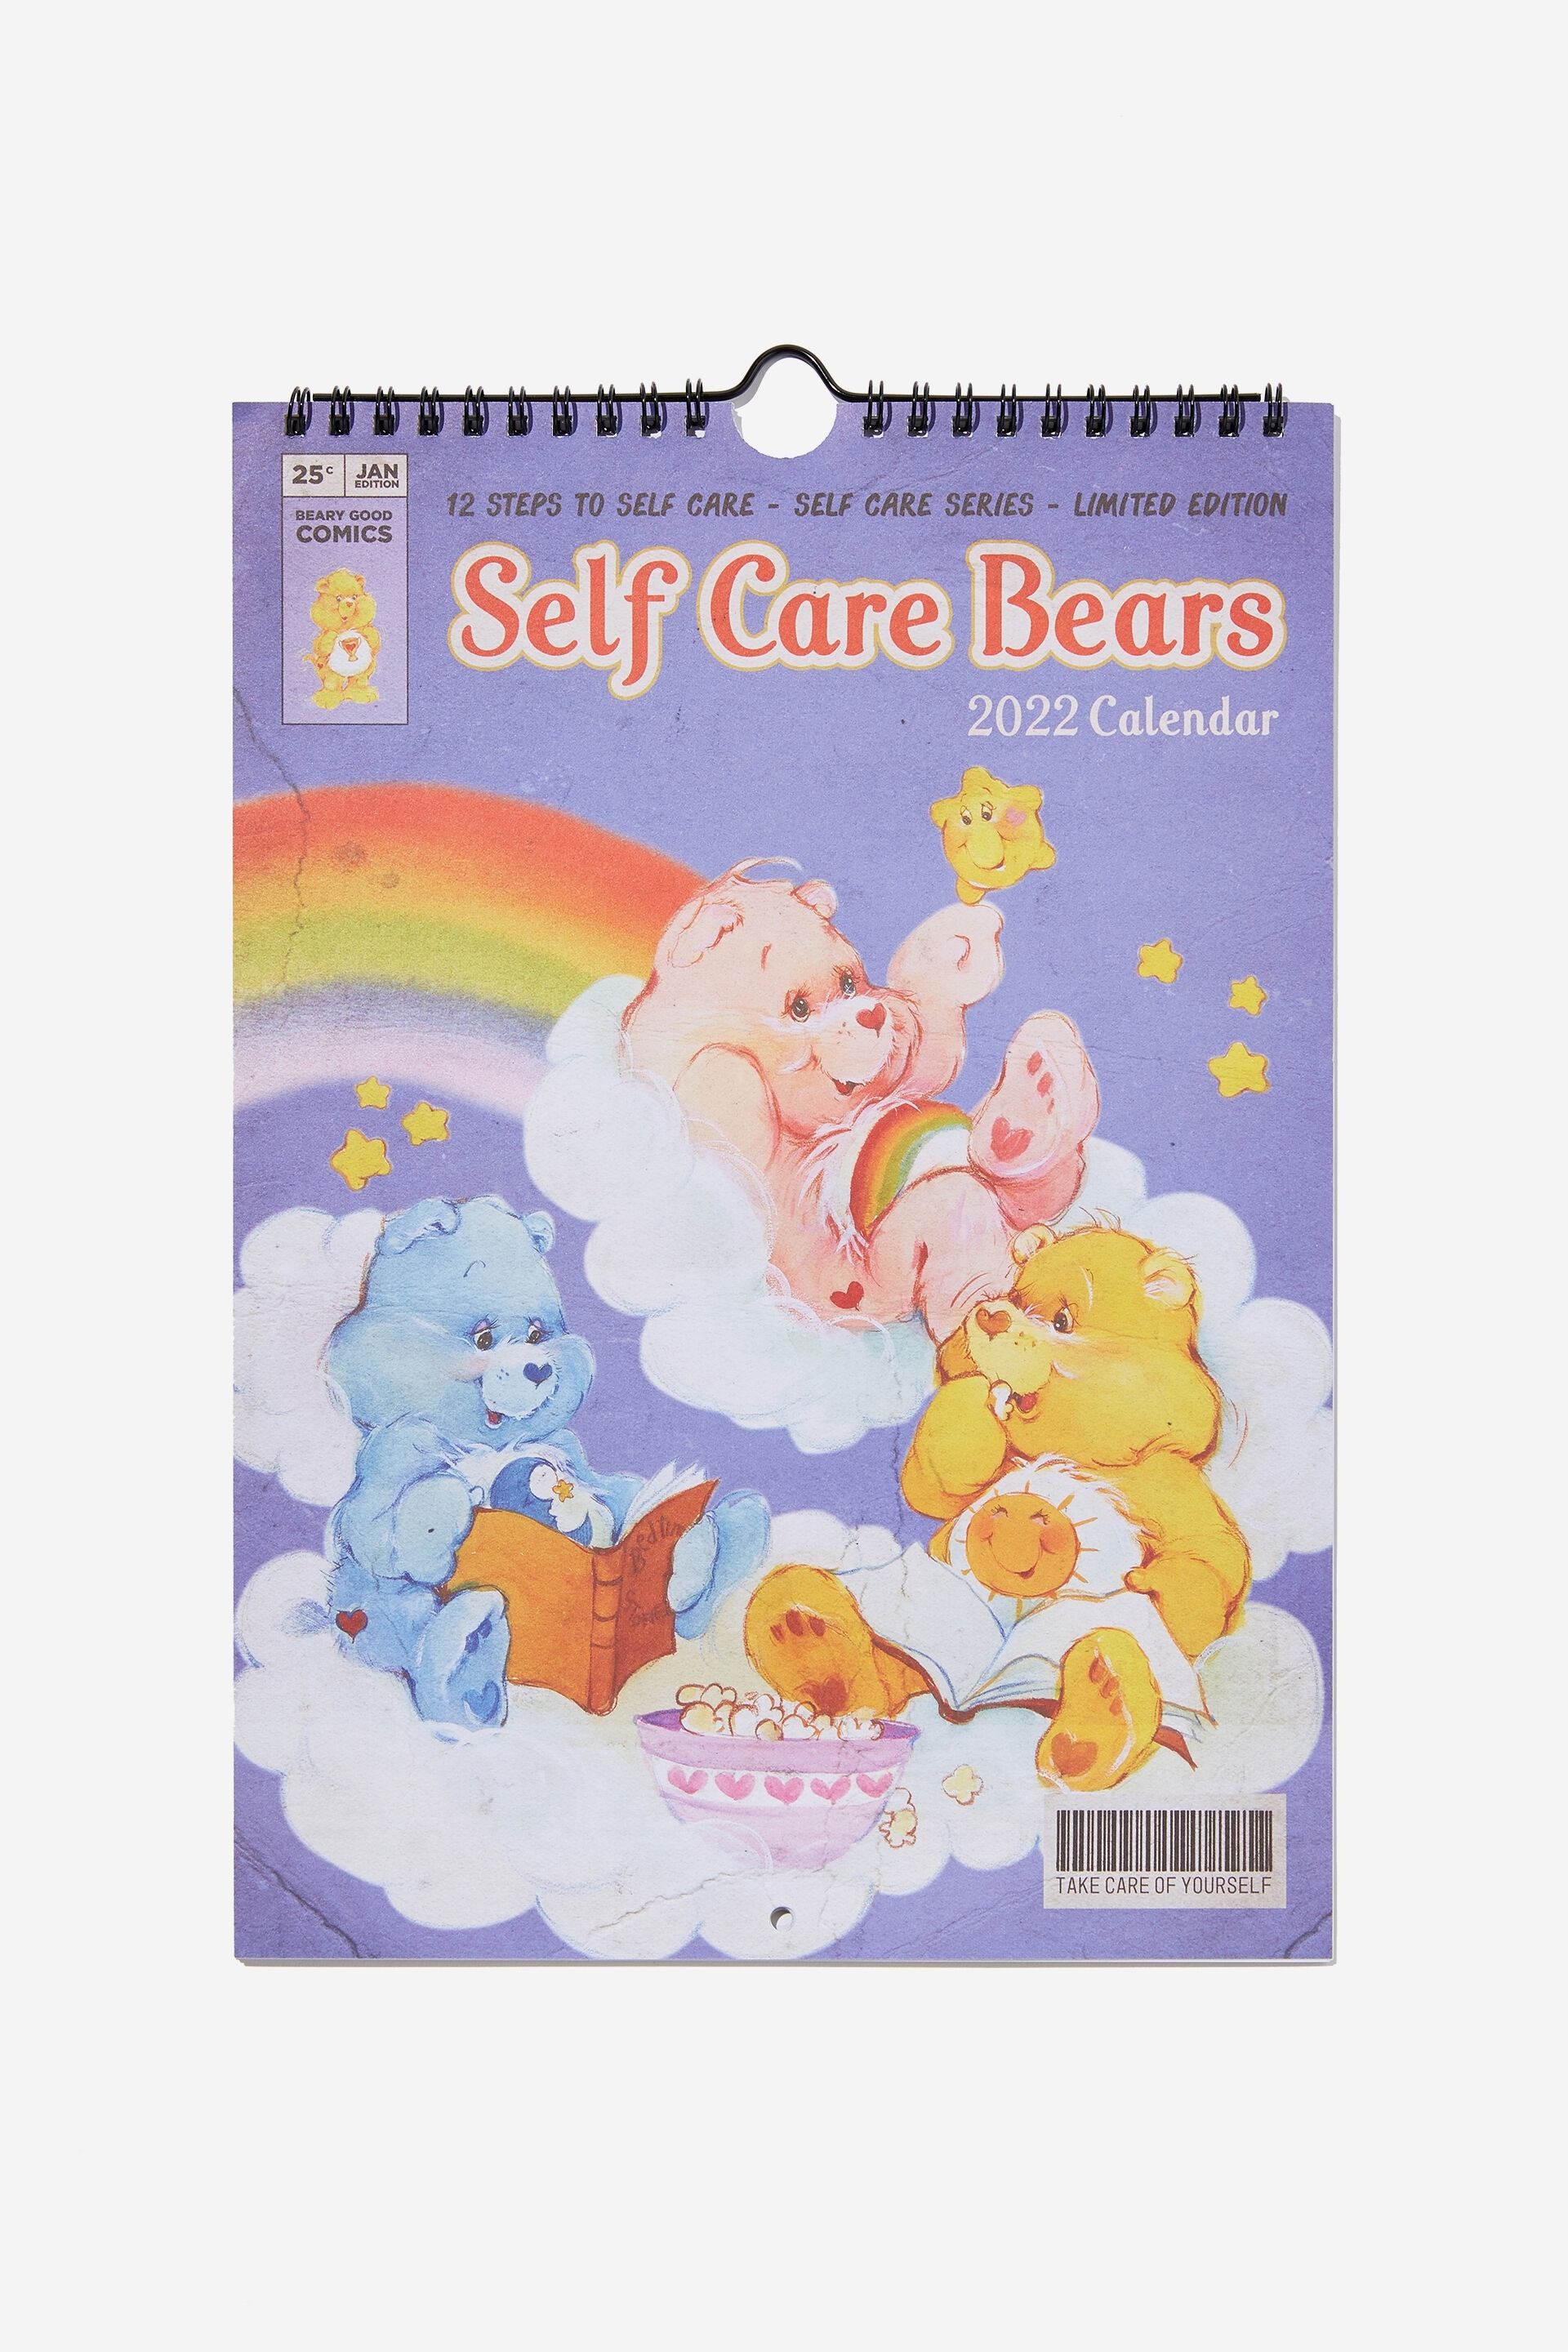 care bears wish upon a star movie